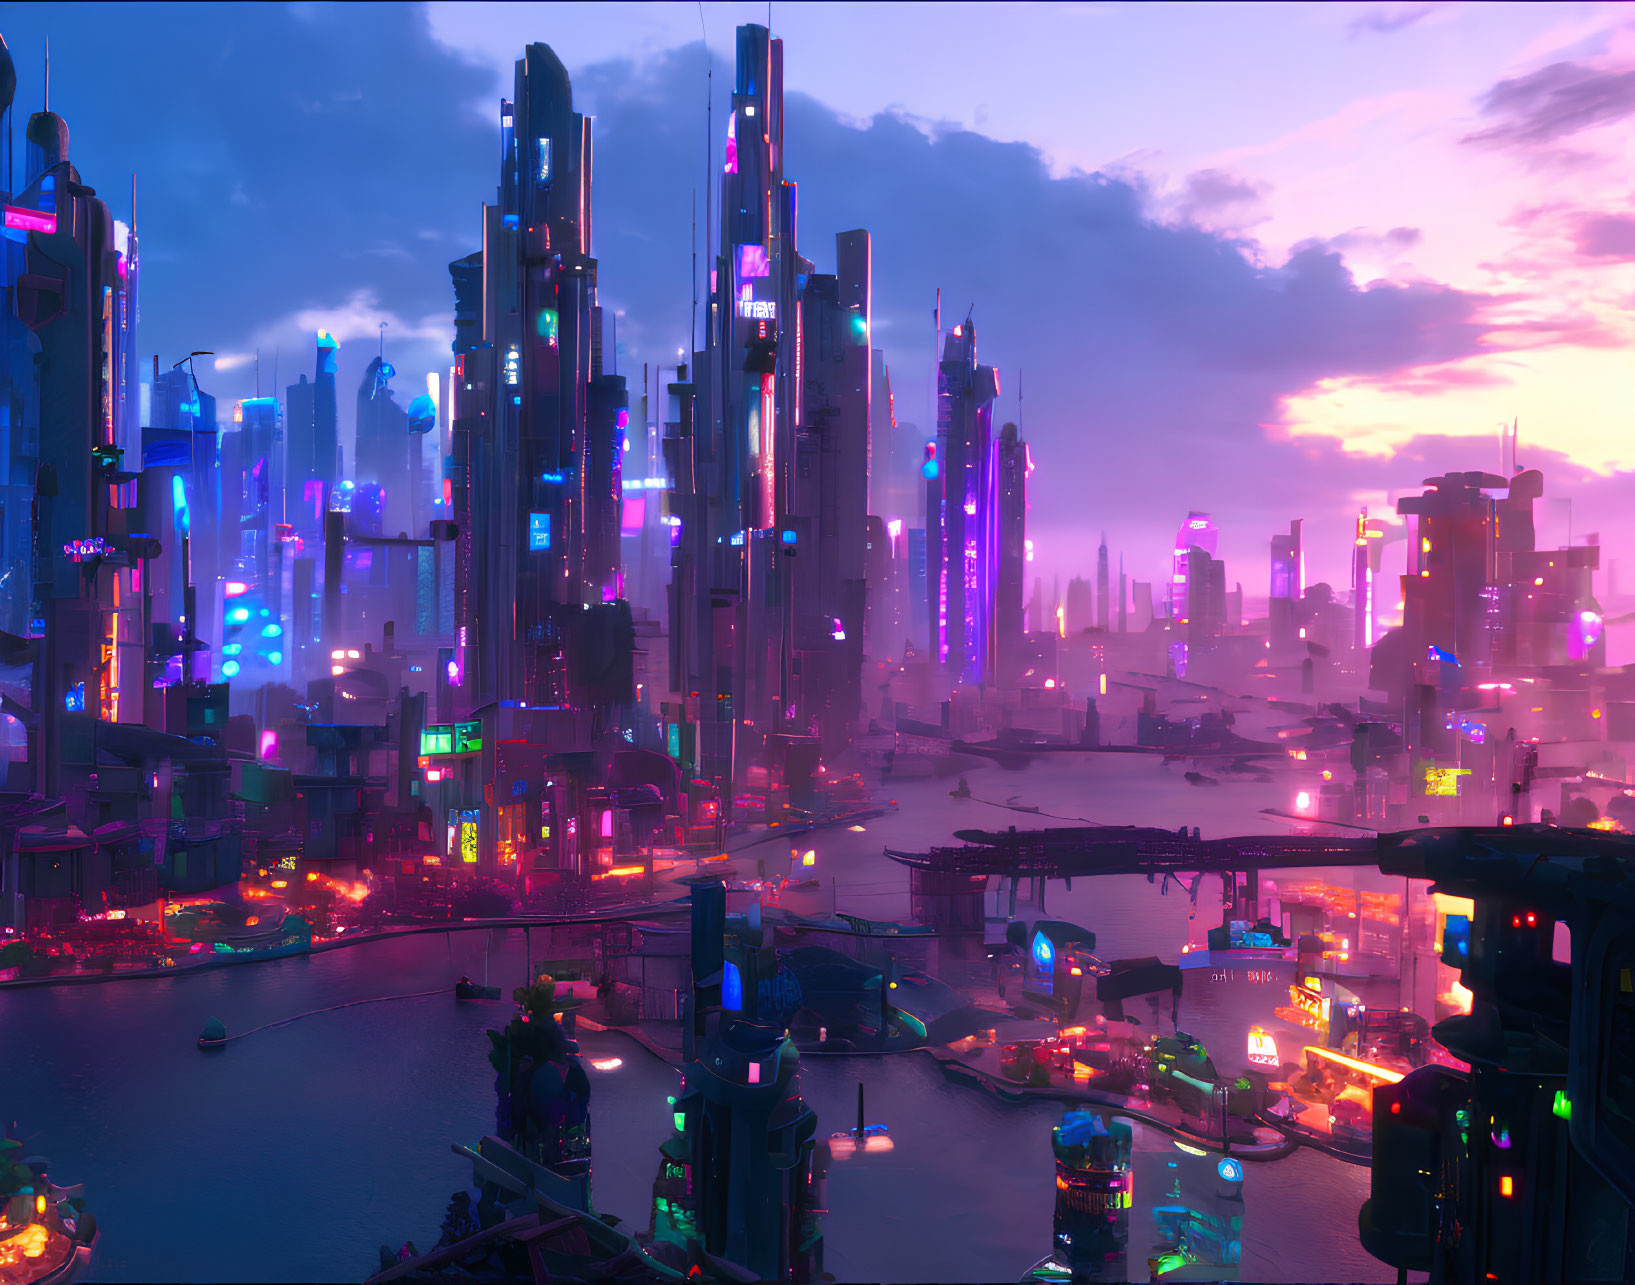 Futuristic cityscape with neon-lit skyscrapers at dusk